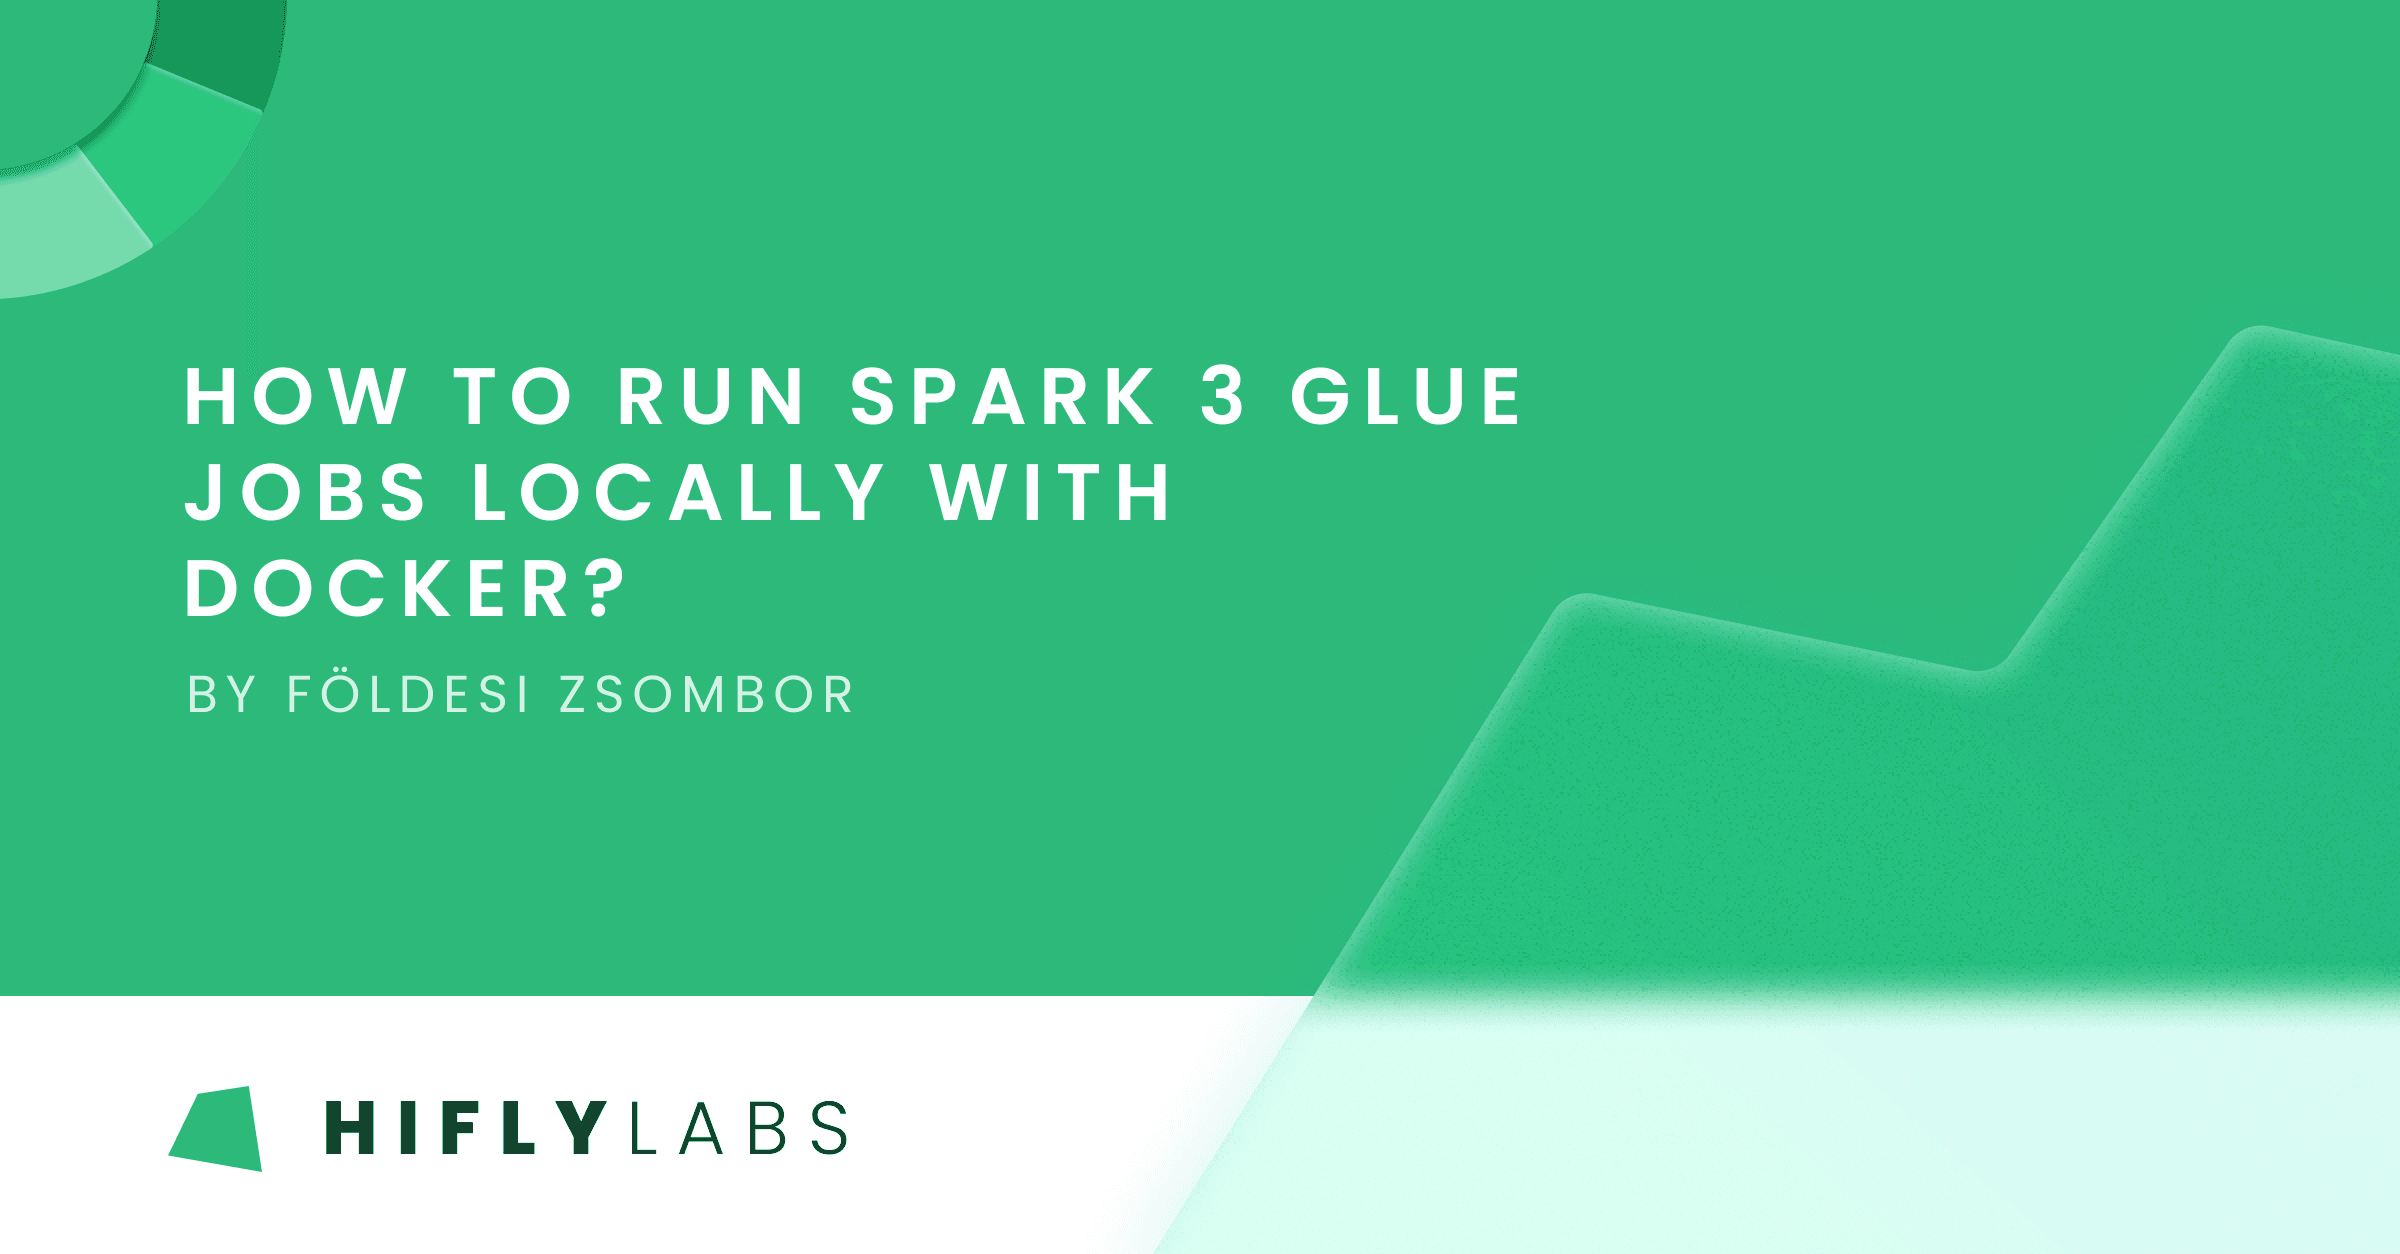 How to Run Spark 3 Glue Jobs Locally With Docker?